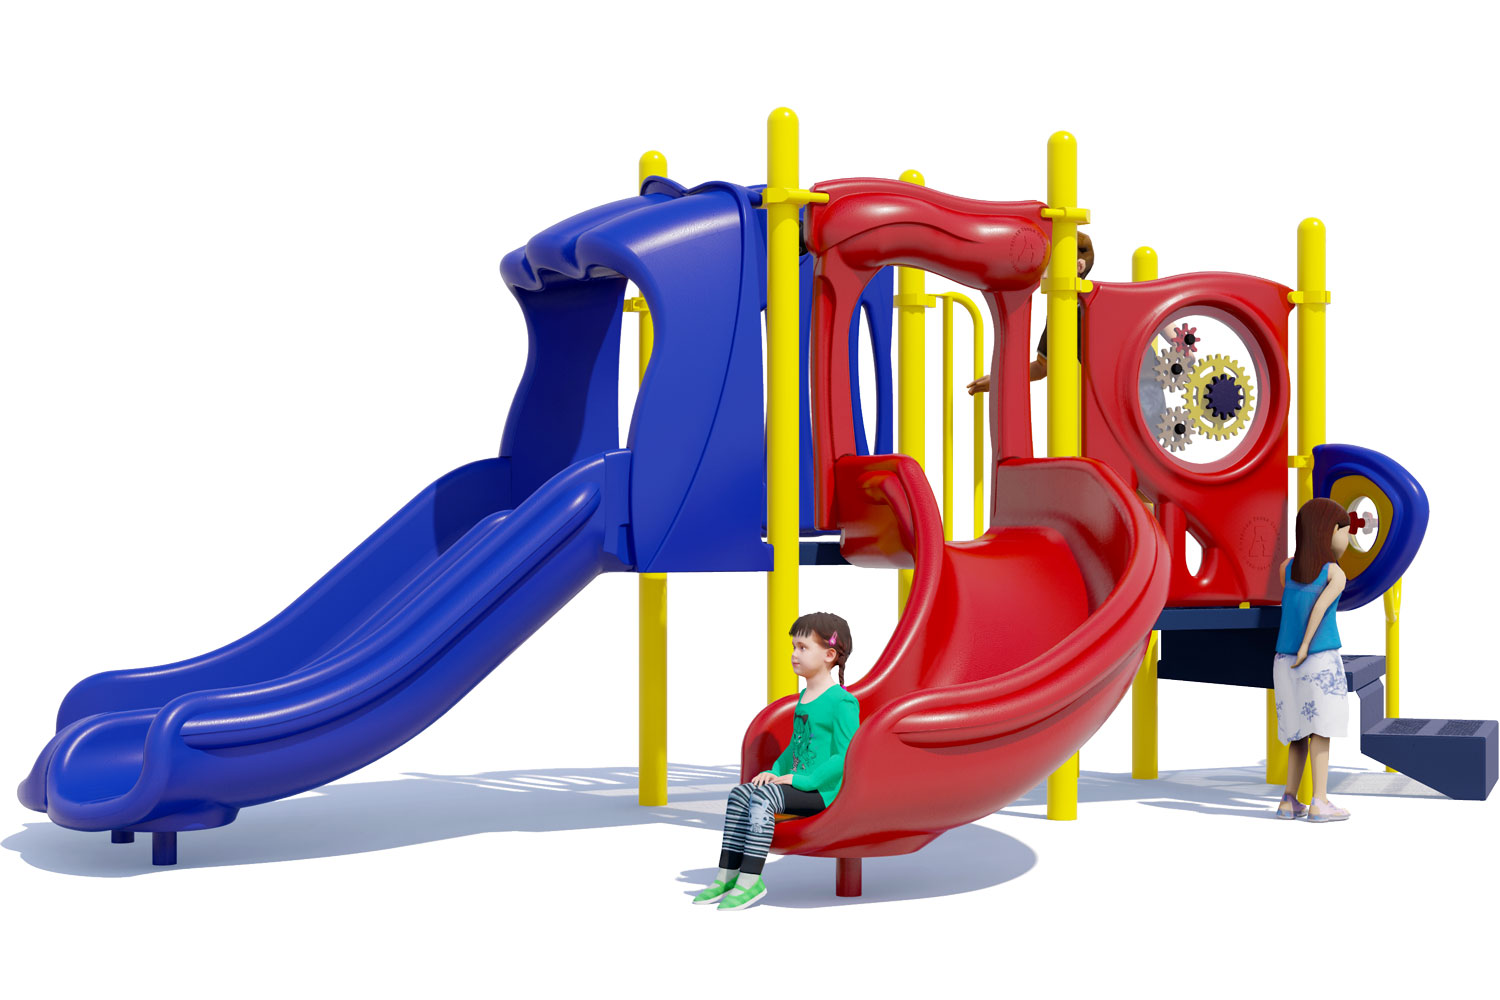 Sunshine - Primary - Front - Daycare Playground Equipment